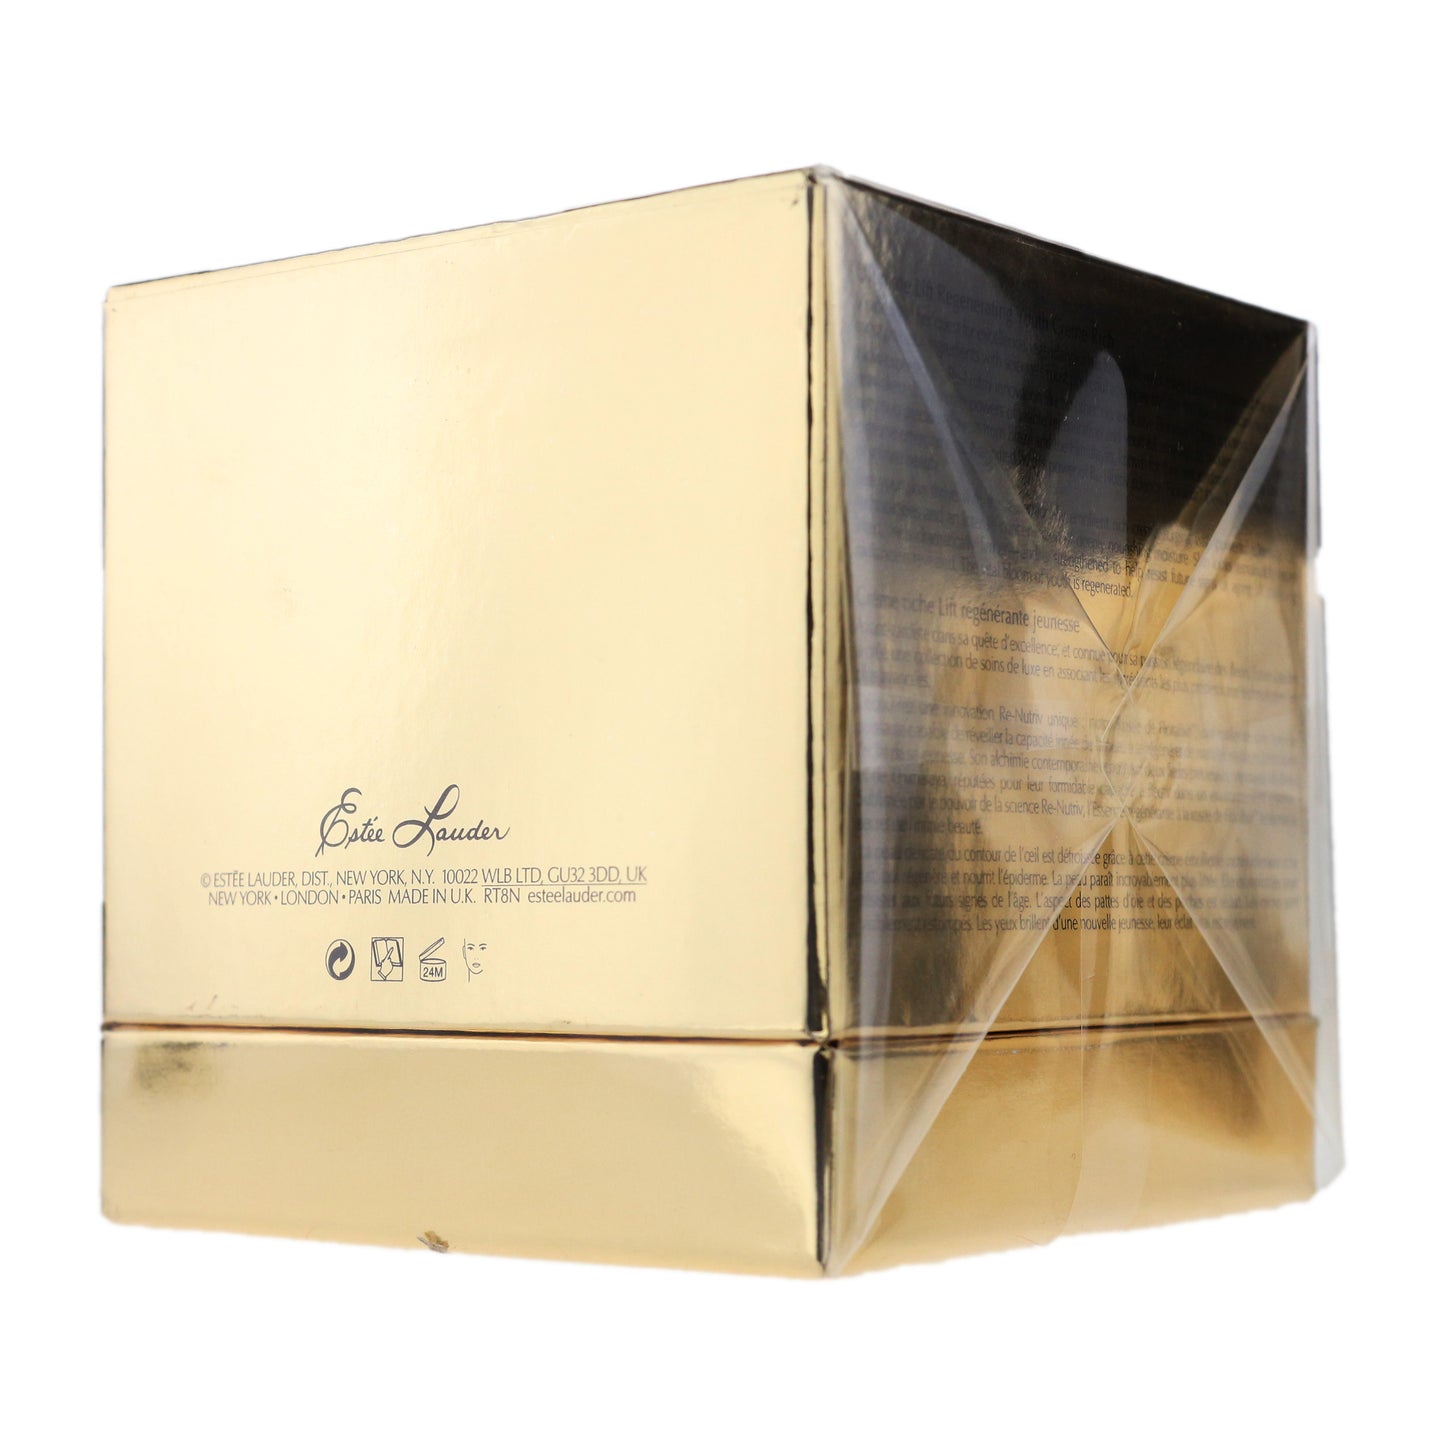 Estee Lauder Ultimate Lift Regenerating Youth Cream Rich 1.7Oz New In Box